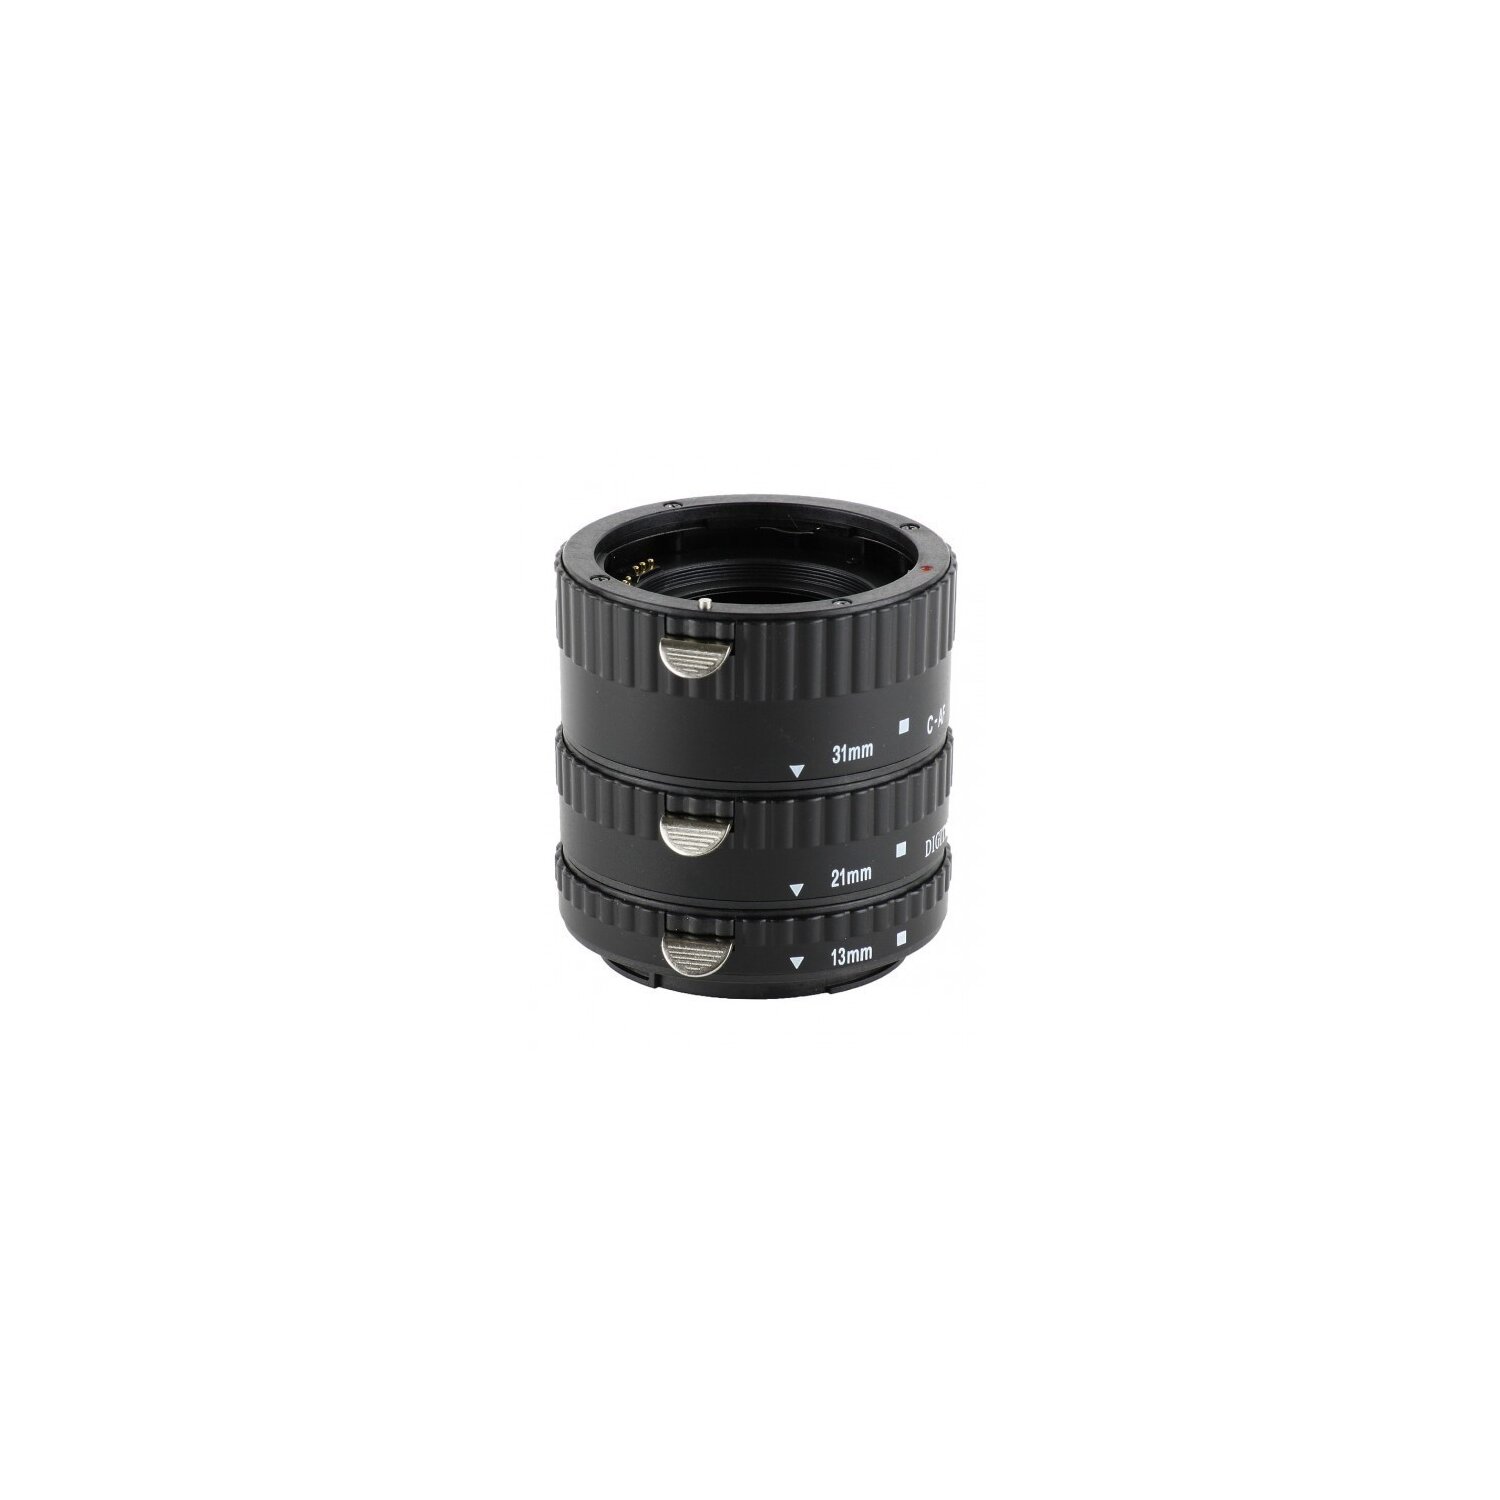 Automatik Zwischenringe 3-teilig fuer Makrofotographie passend zu Canon EF/EF-S EOS 1Ds Mark II, 1D Mark II N, 1D Mark I